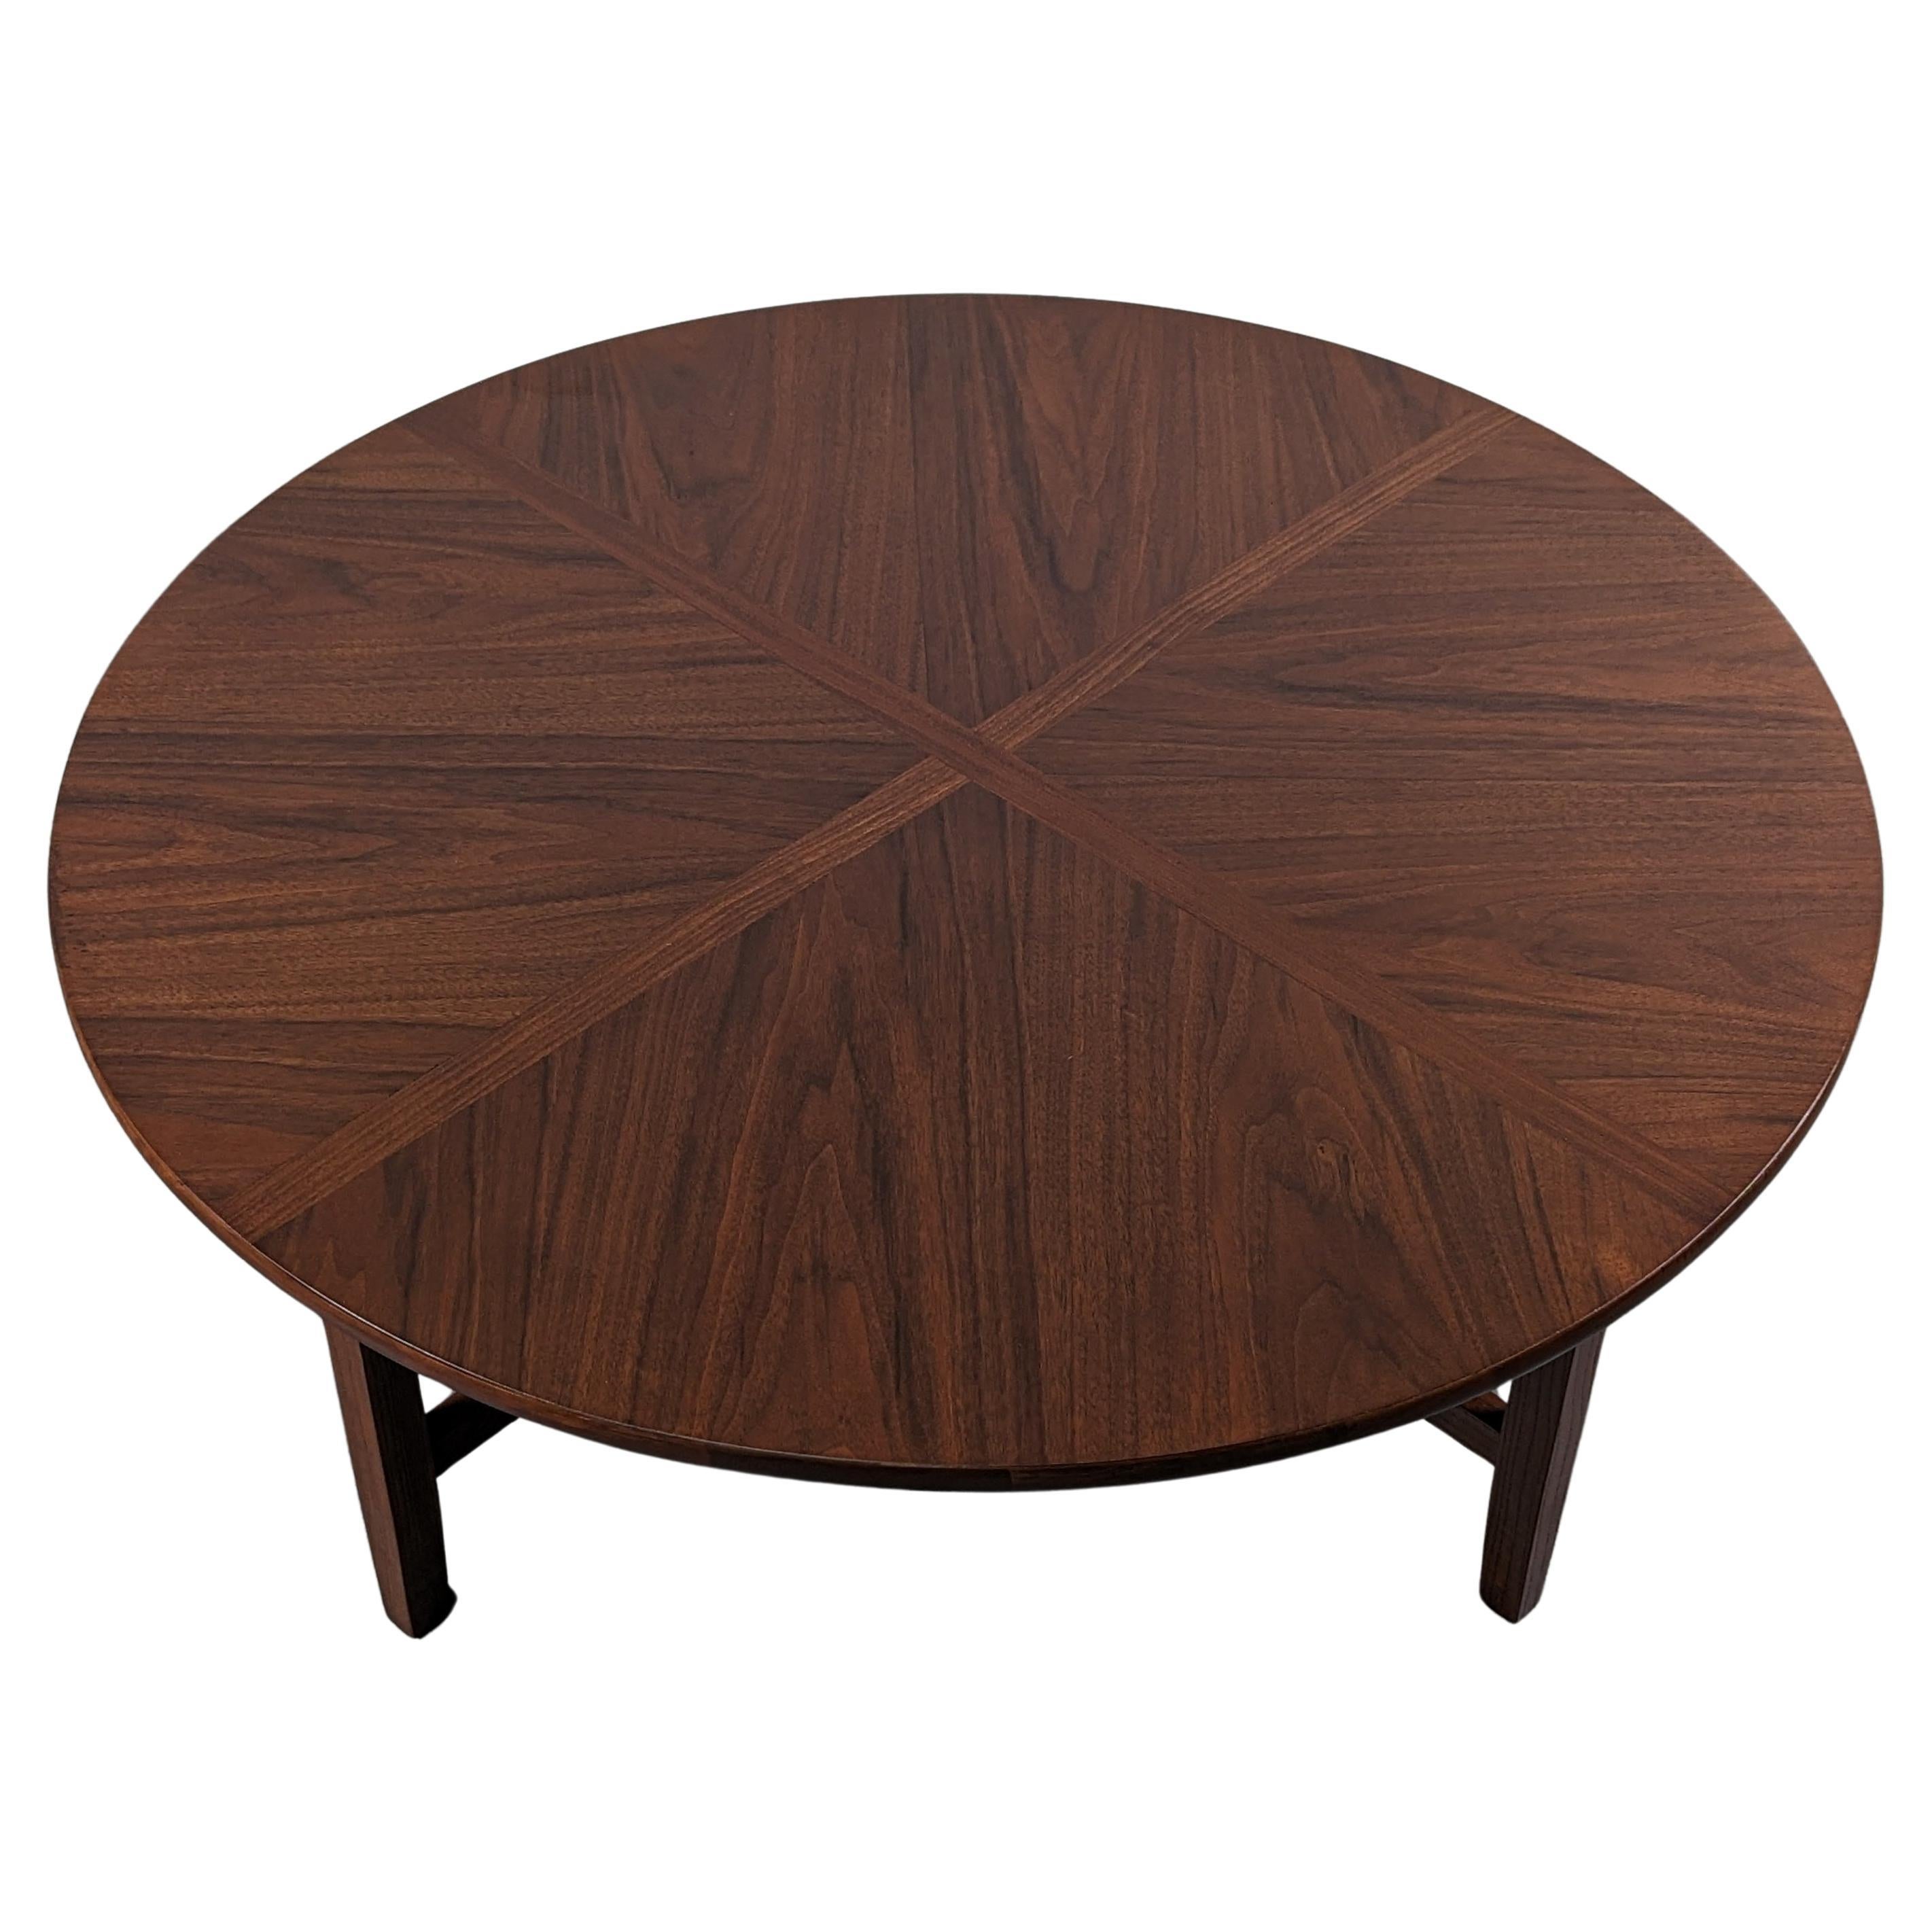 Refinished Mid Century Modern Walnut & Oak Coffee Table, c1960s